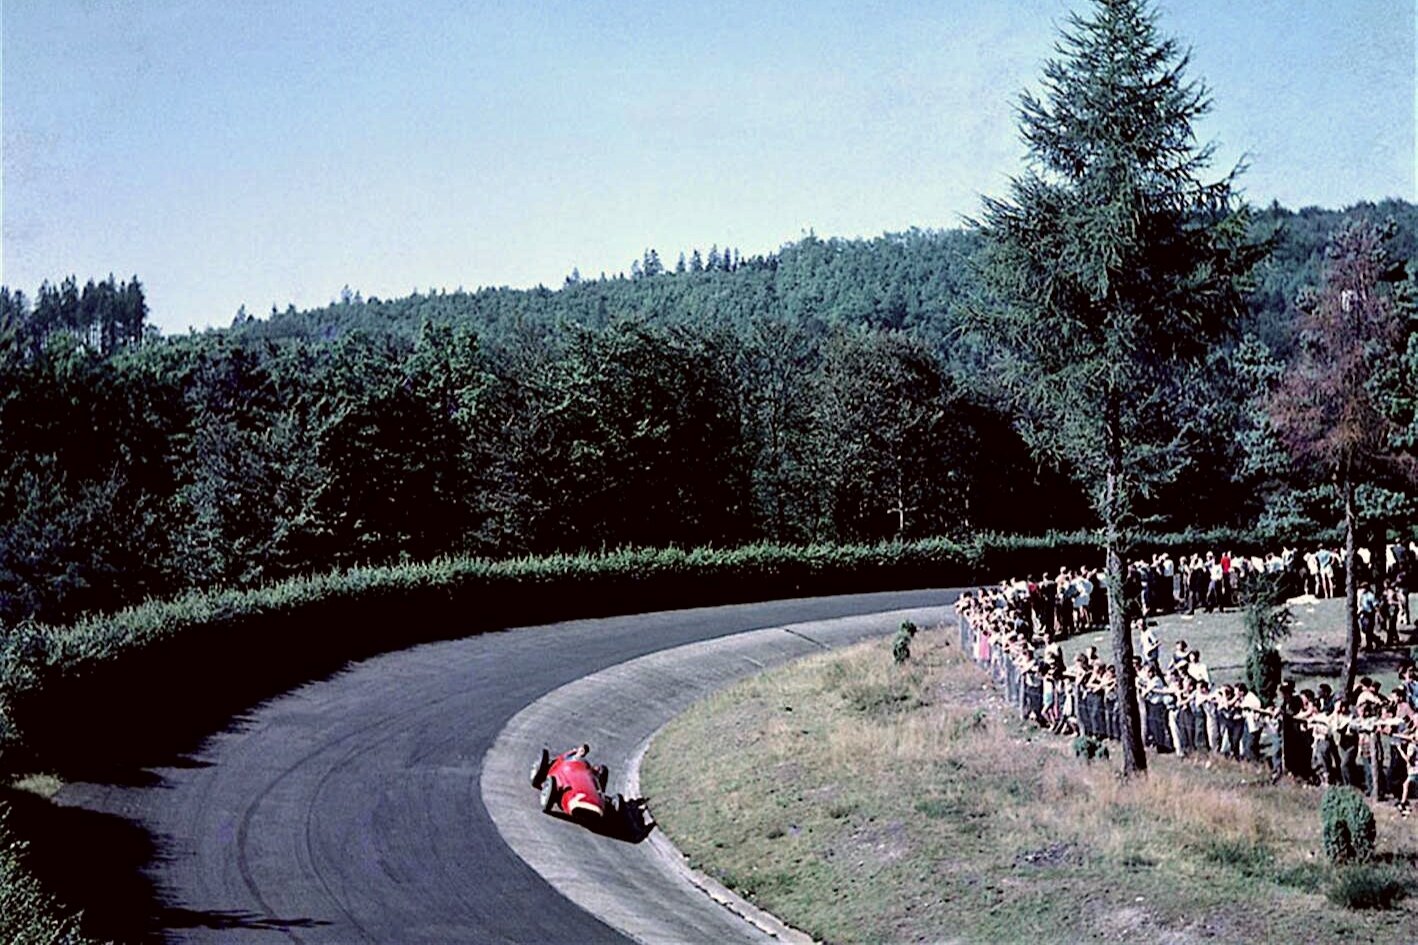 1957 German GP at the mighty Nürburgring Nordschleife.